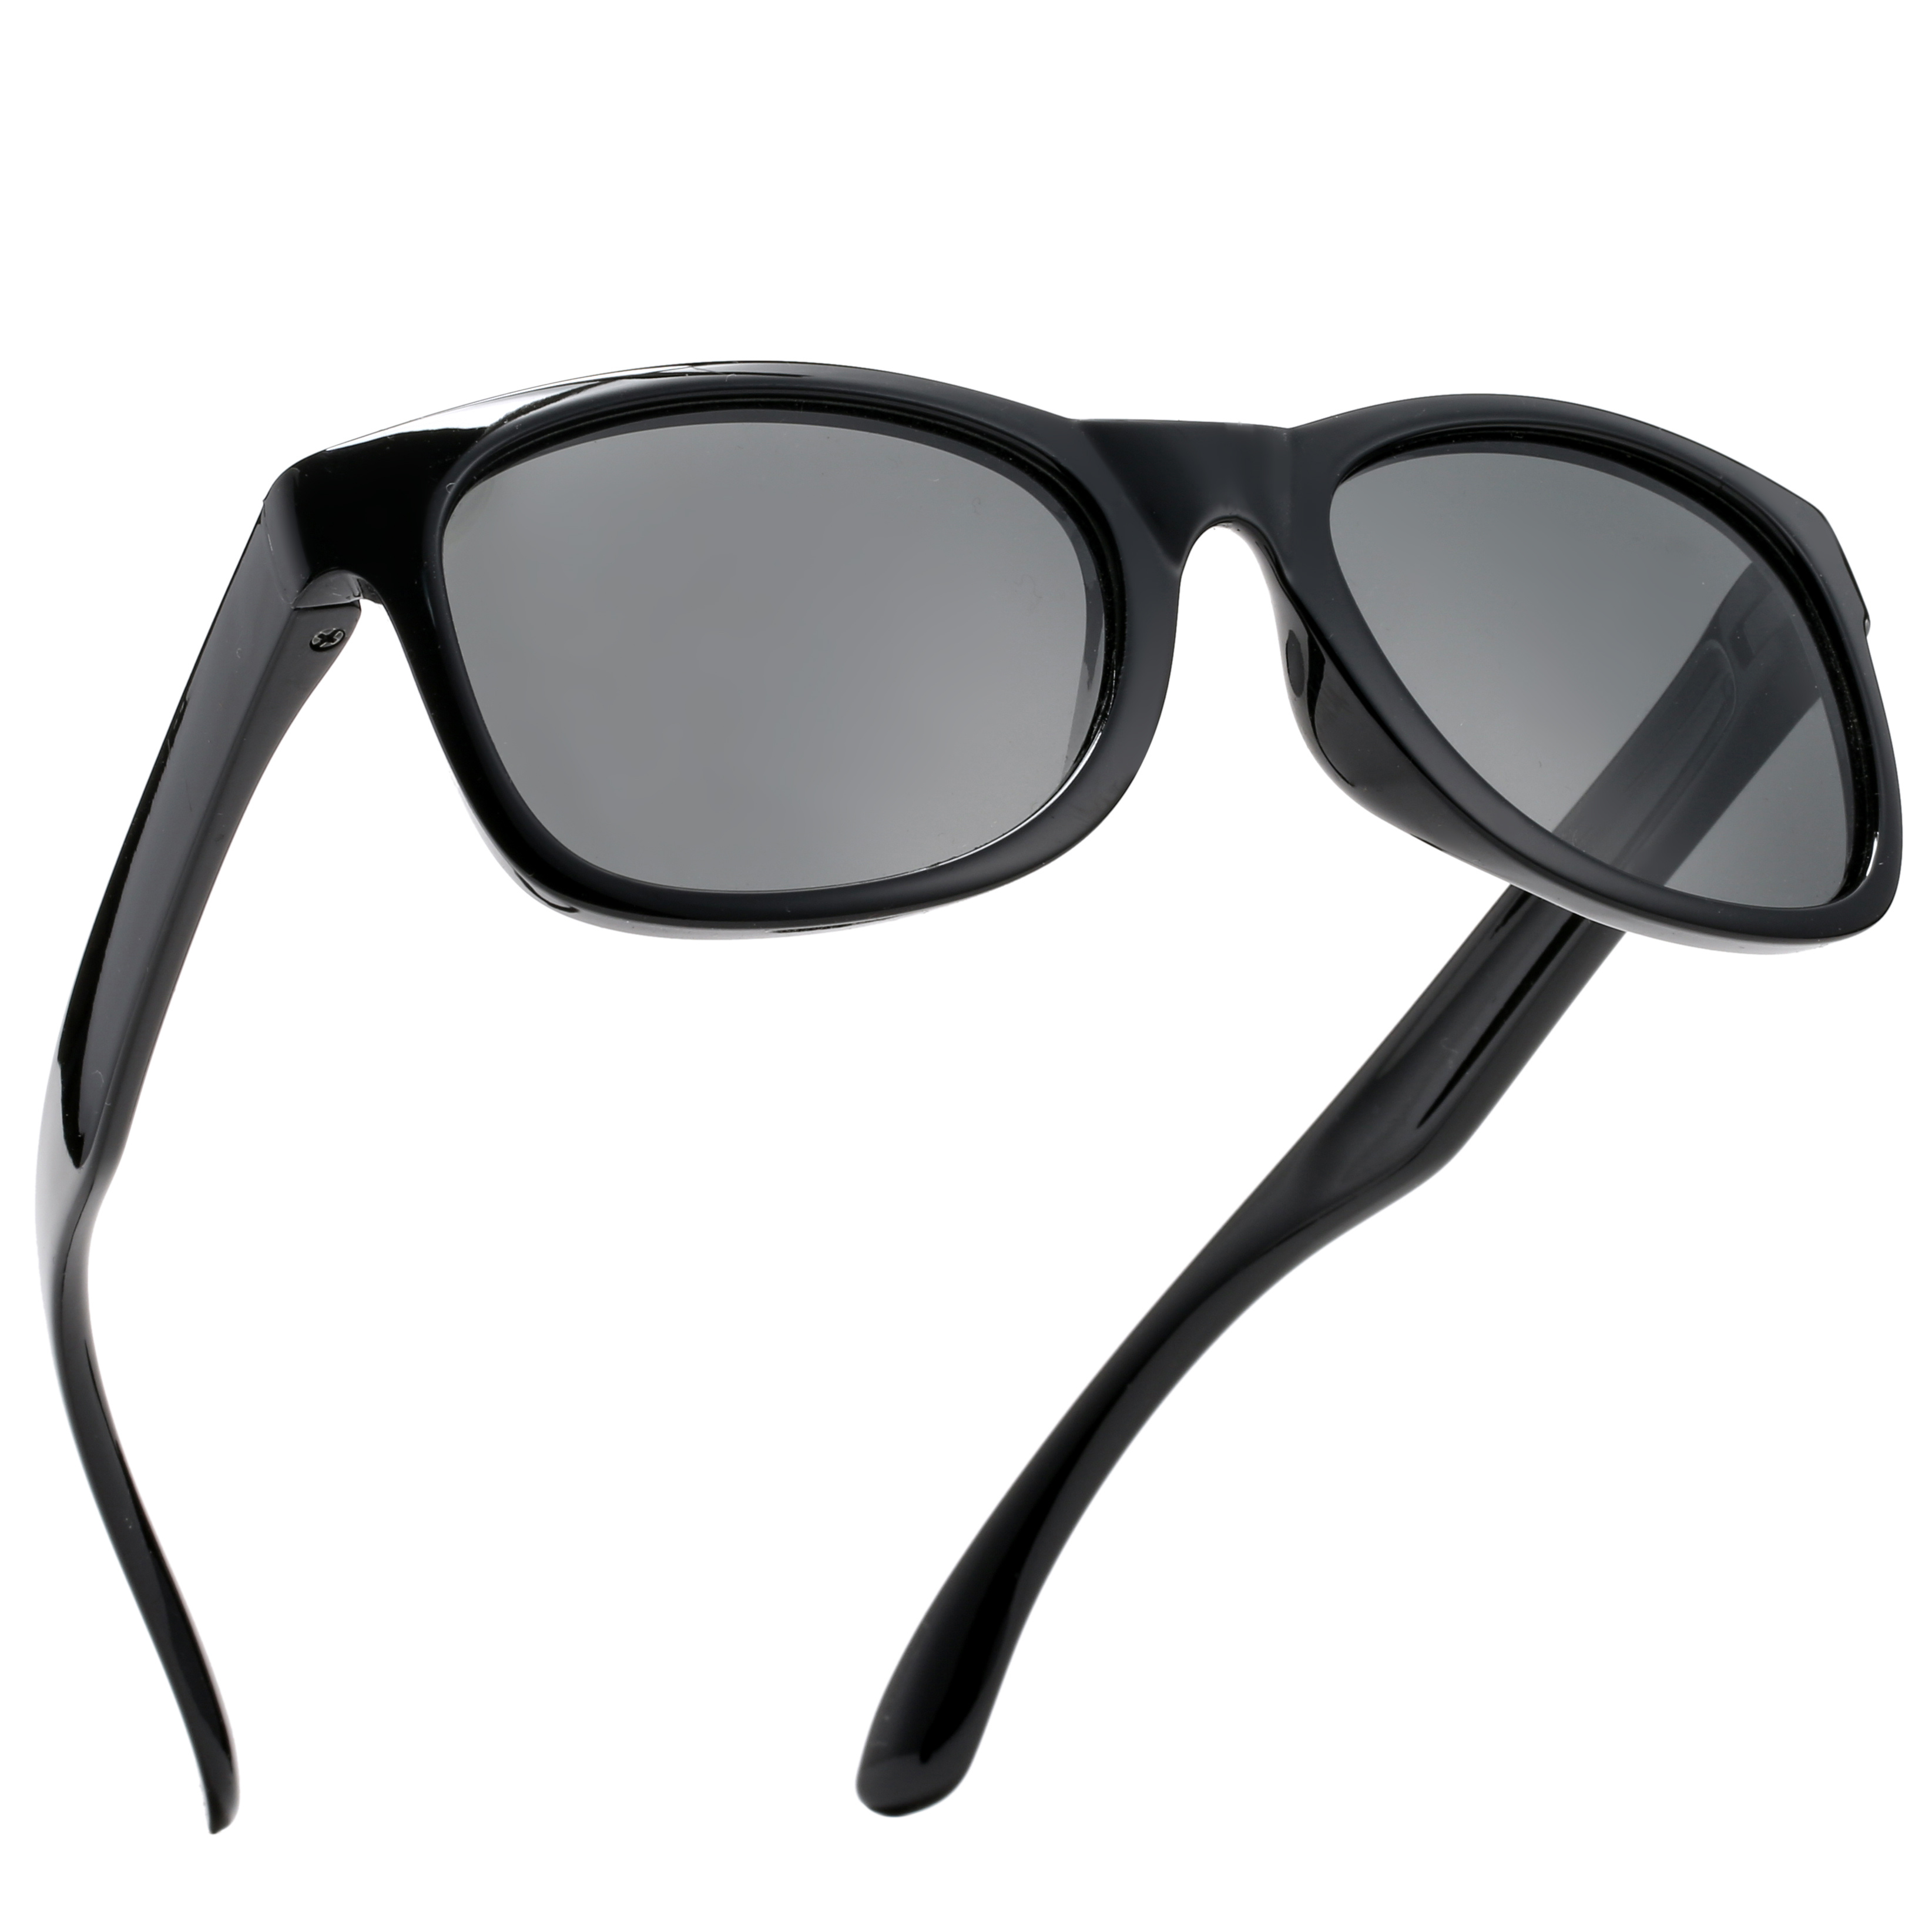 Kids Polarized Sunglasses Sport TPEE Flexible Frame 100% UV Protection for  Boys Girls Age 5-12